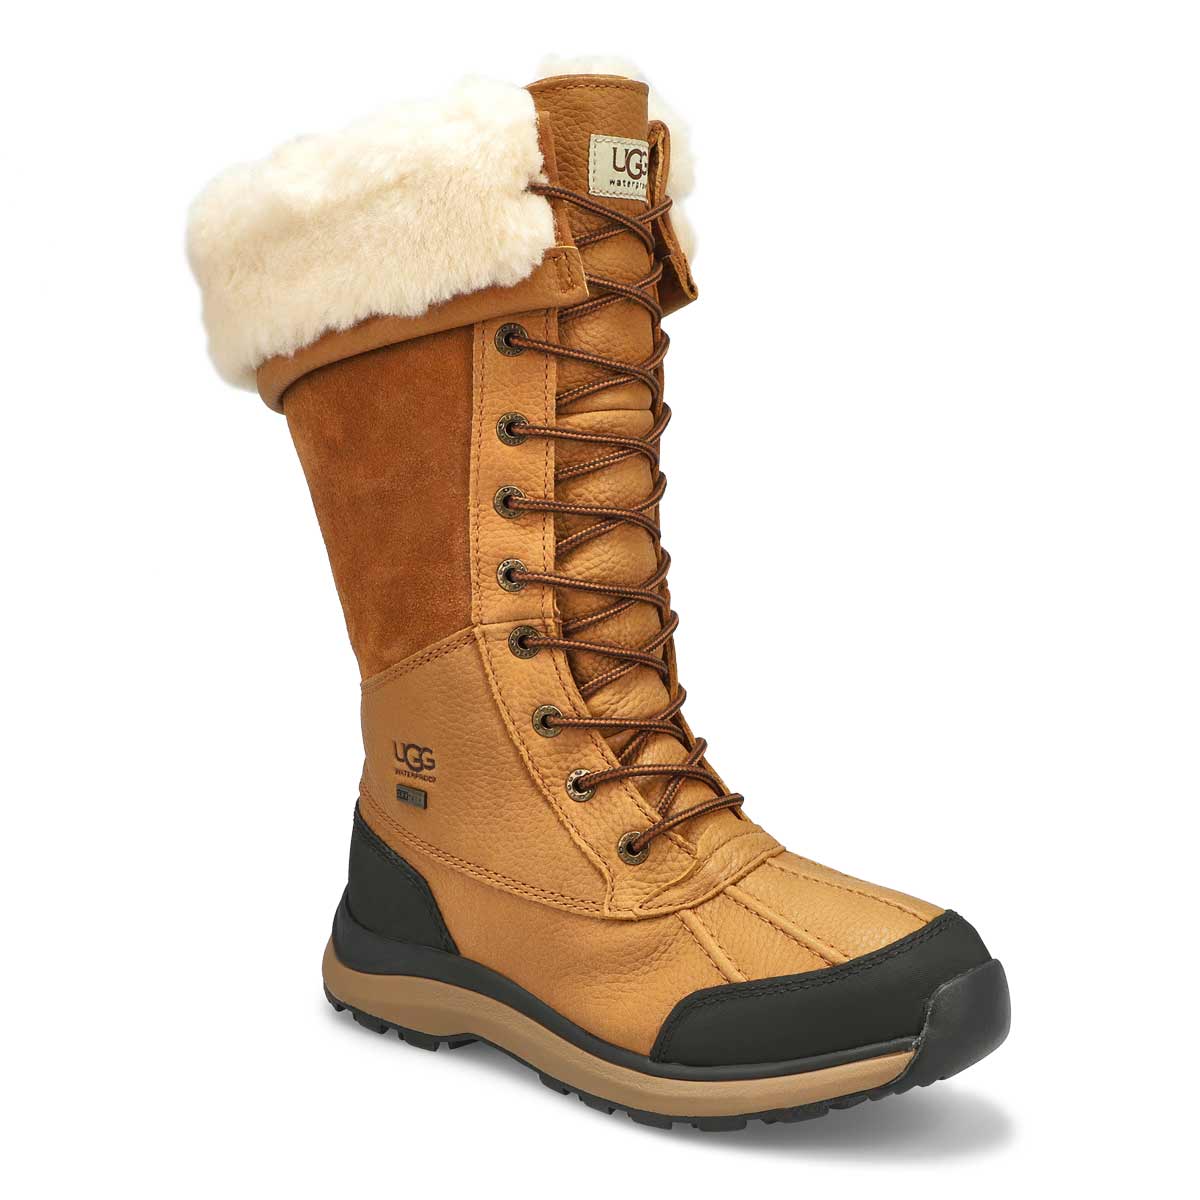 tall ugg winter boots Cheaper Than 